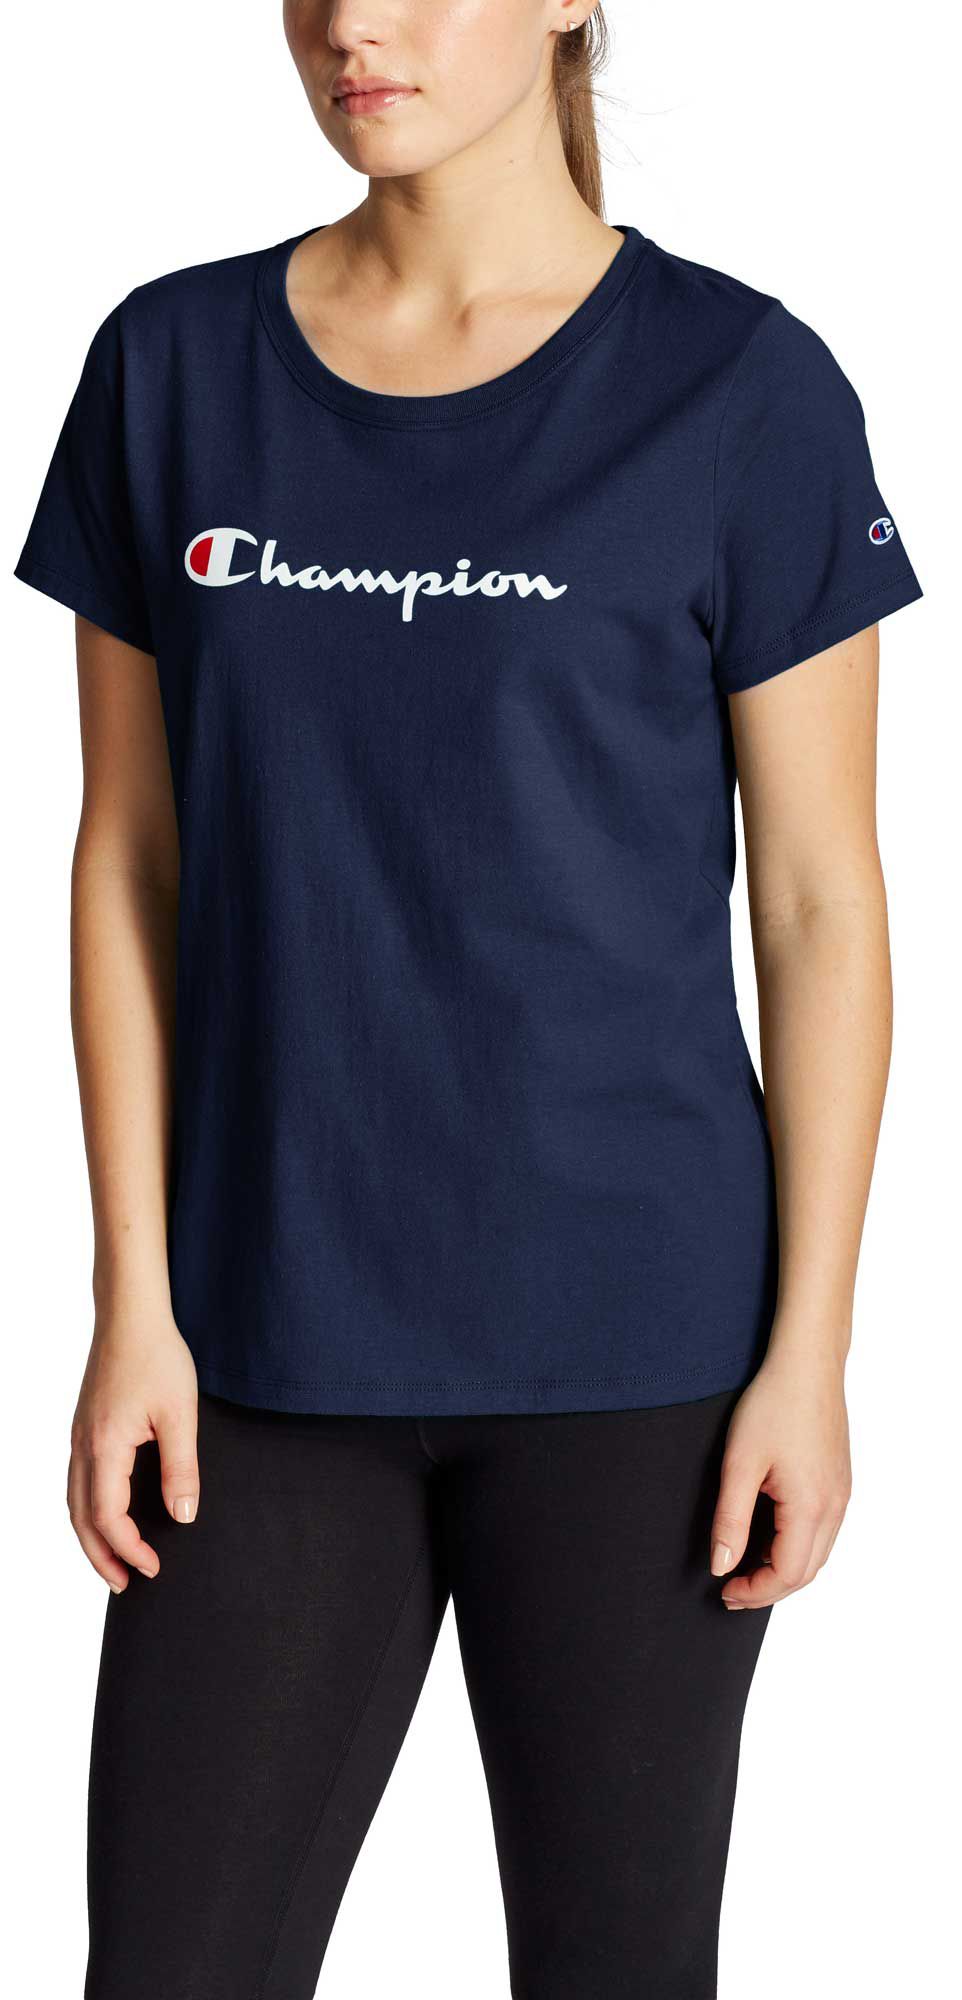 grey champion shirt womens